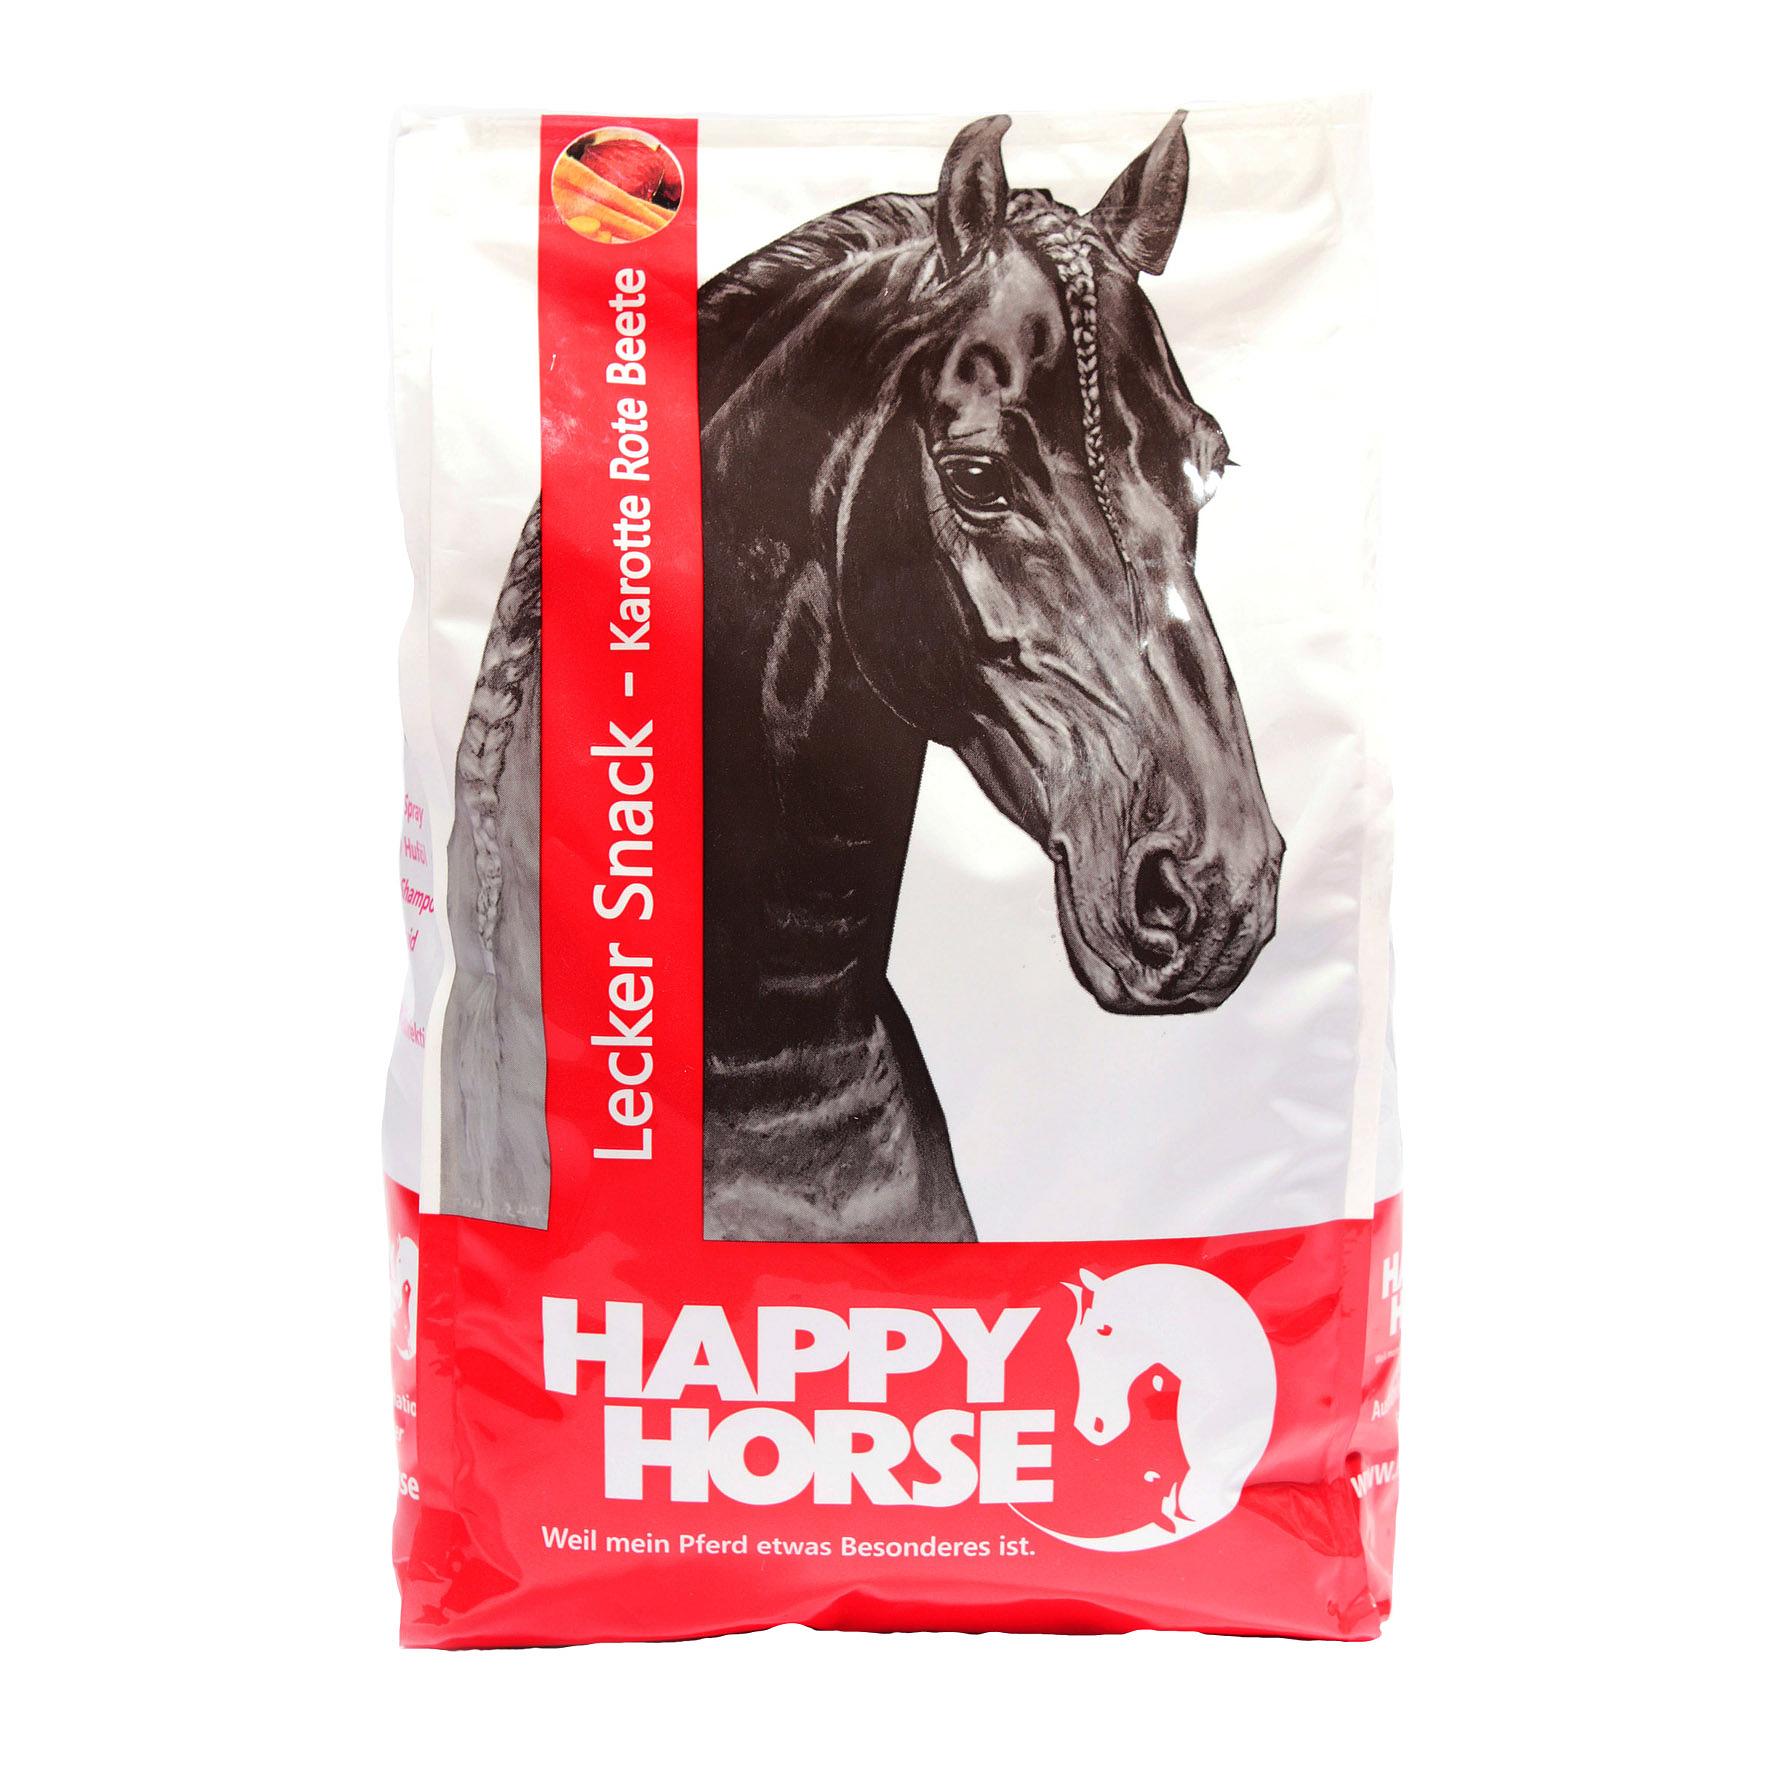 Happyhorse Snacks